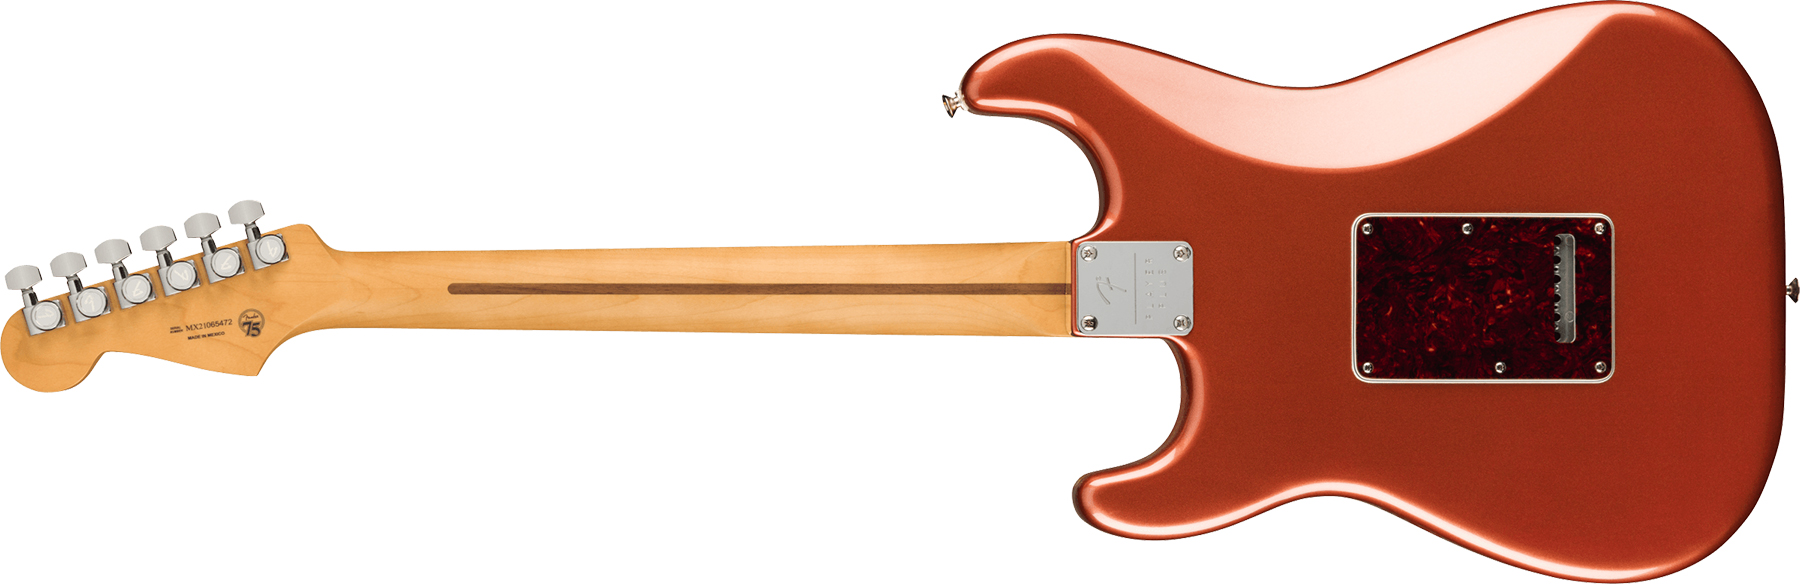 Fender Strat Player Plus Mex 3s Trem Pf - Aged Candy Apple Red - Guitarra eléctrica con forma de str. - Variation 1